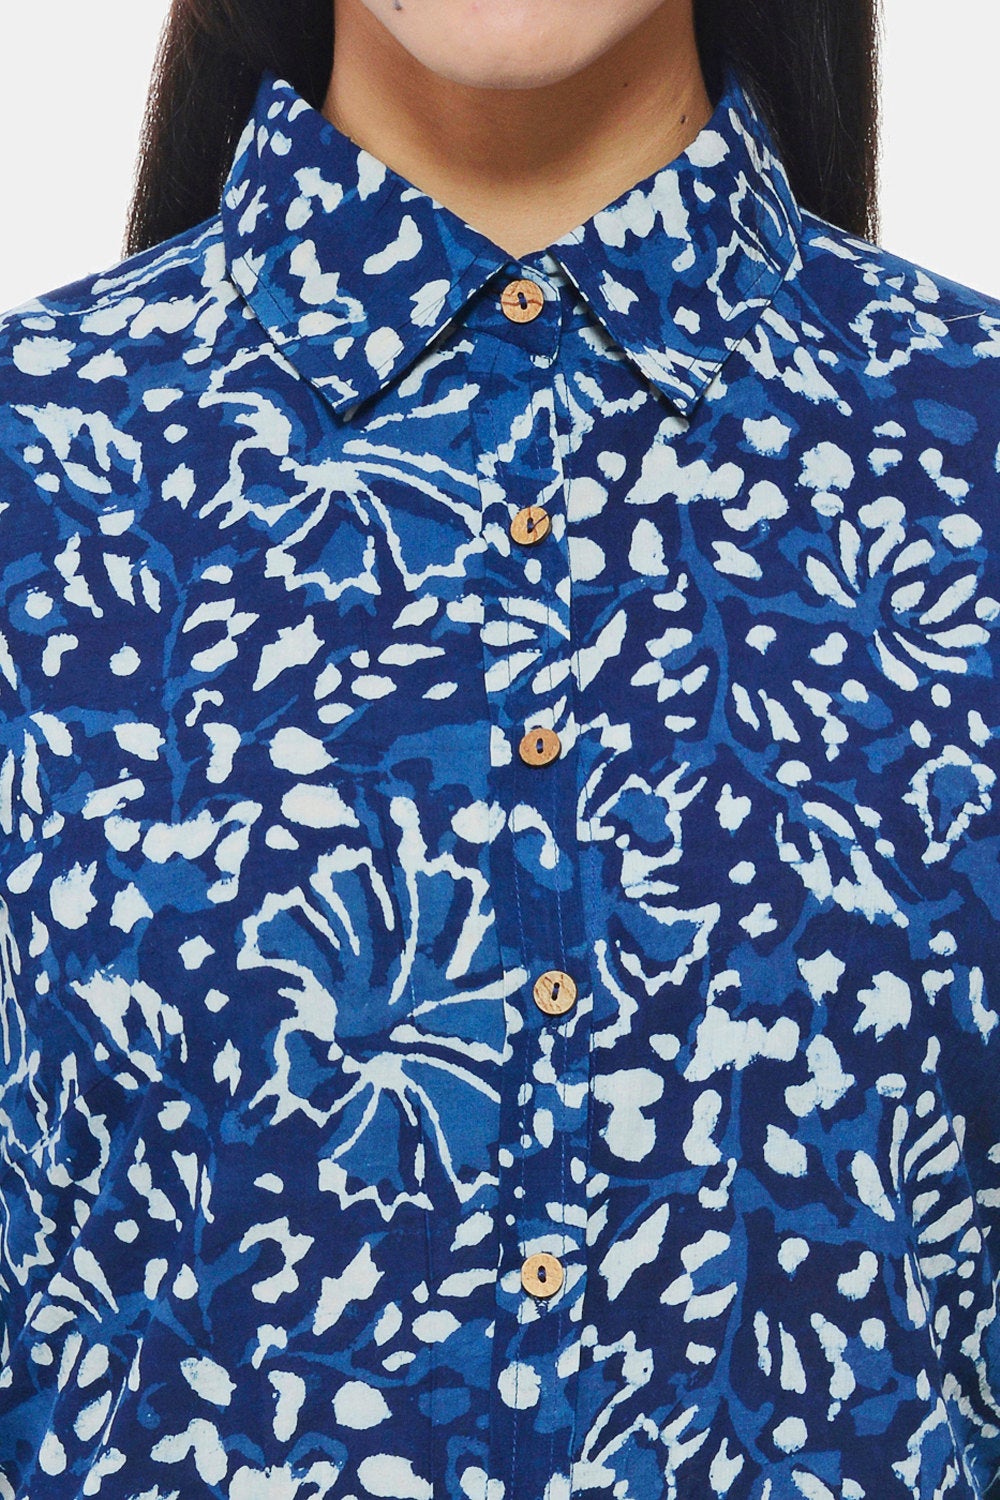 Indigo Hand block printed Shirt in floral design